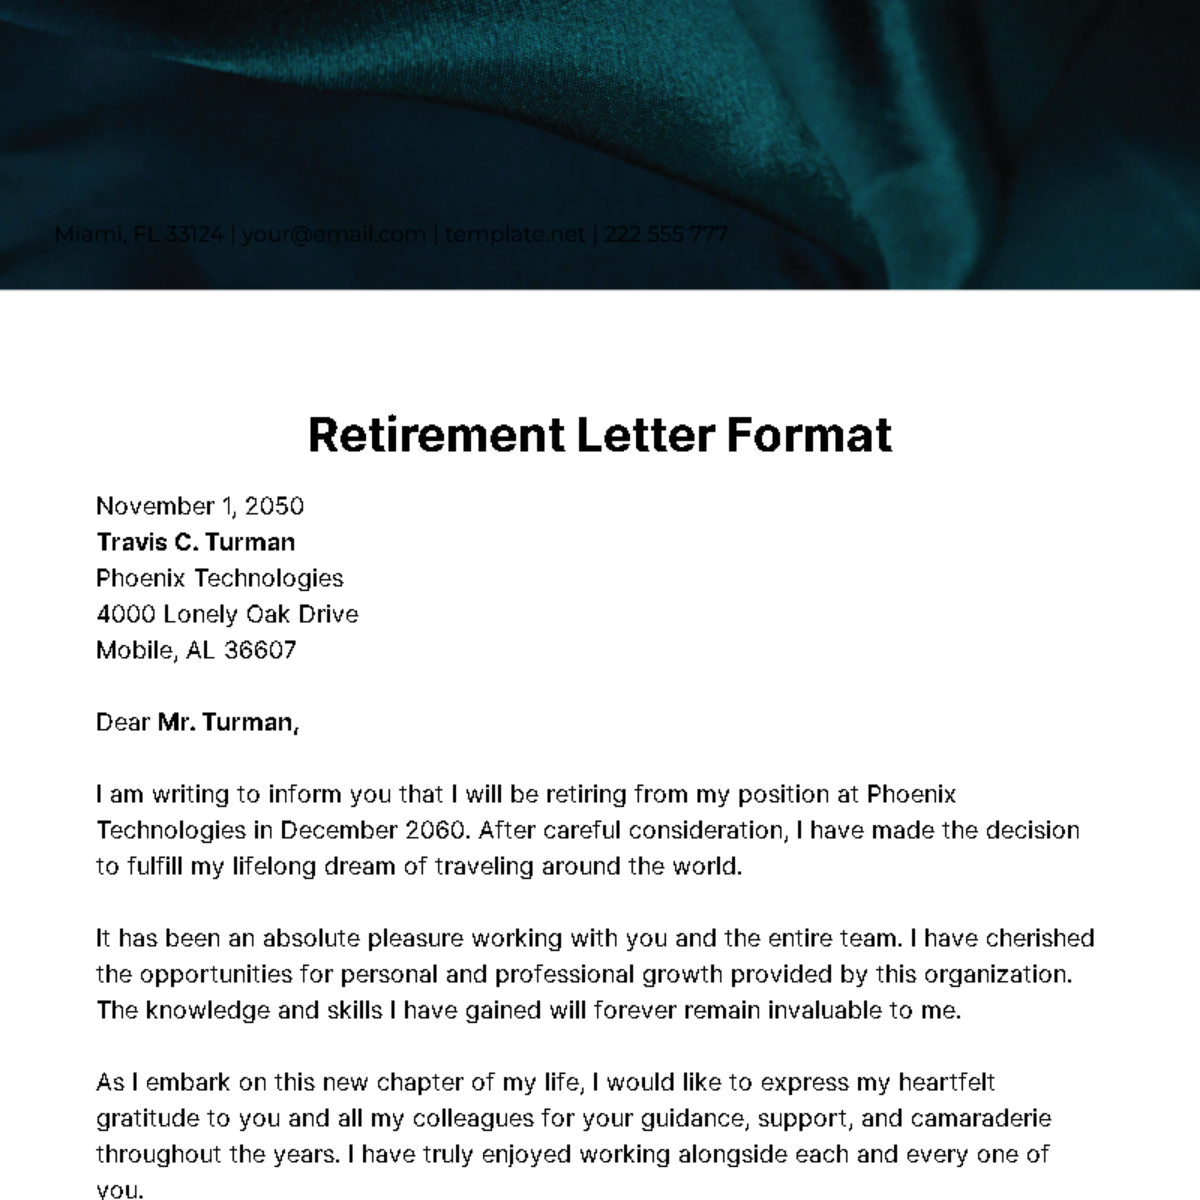 Retirement Letter Format Template